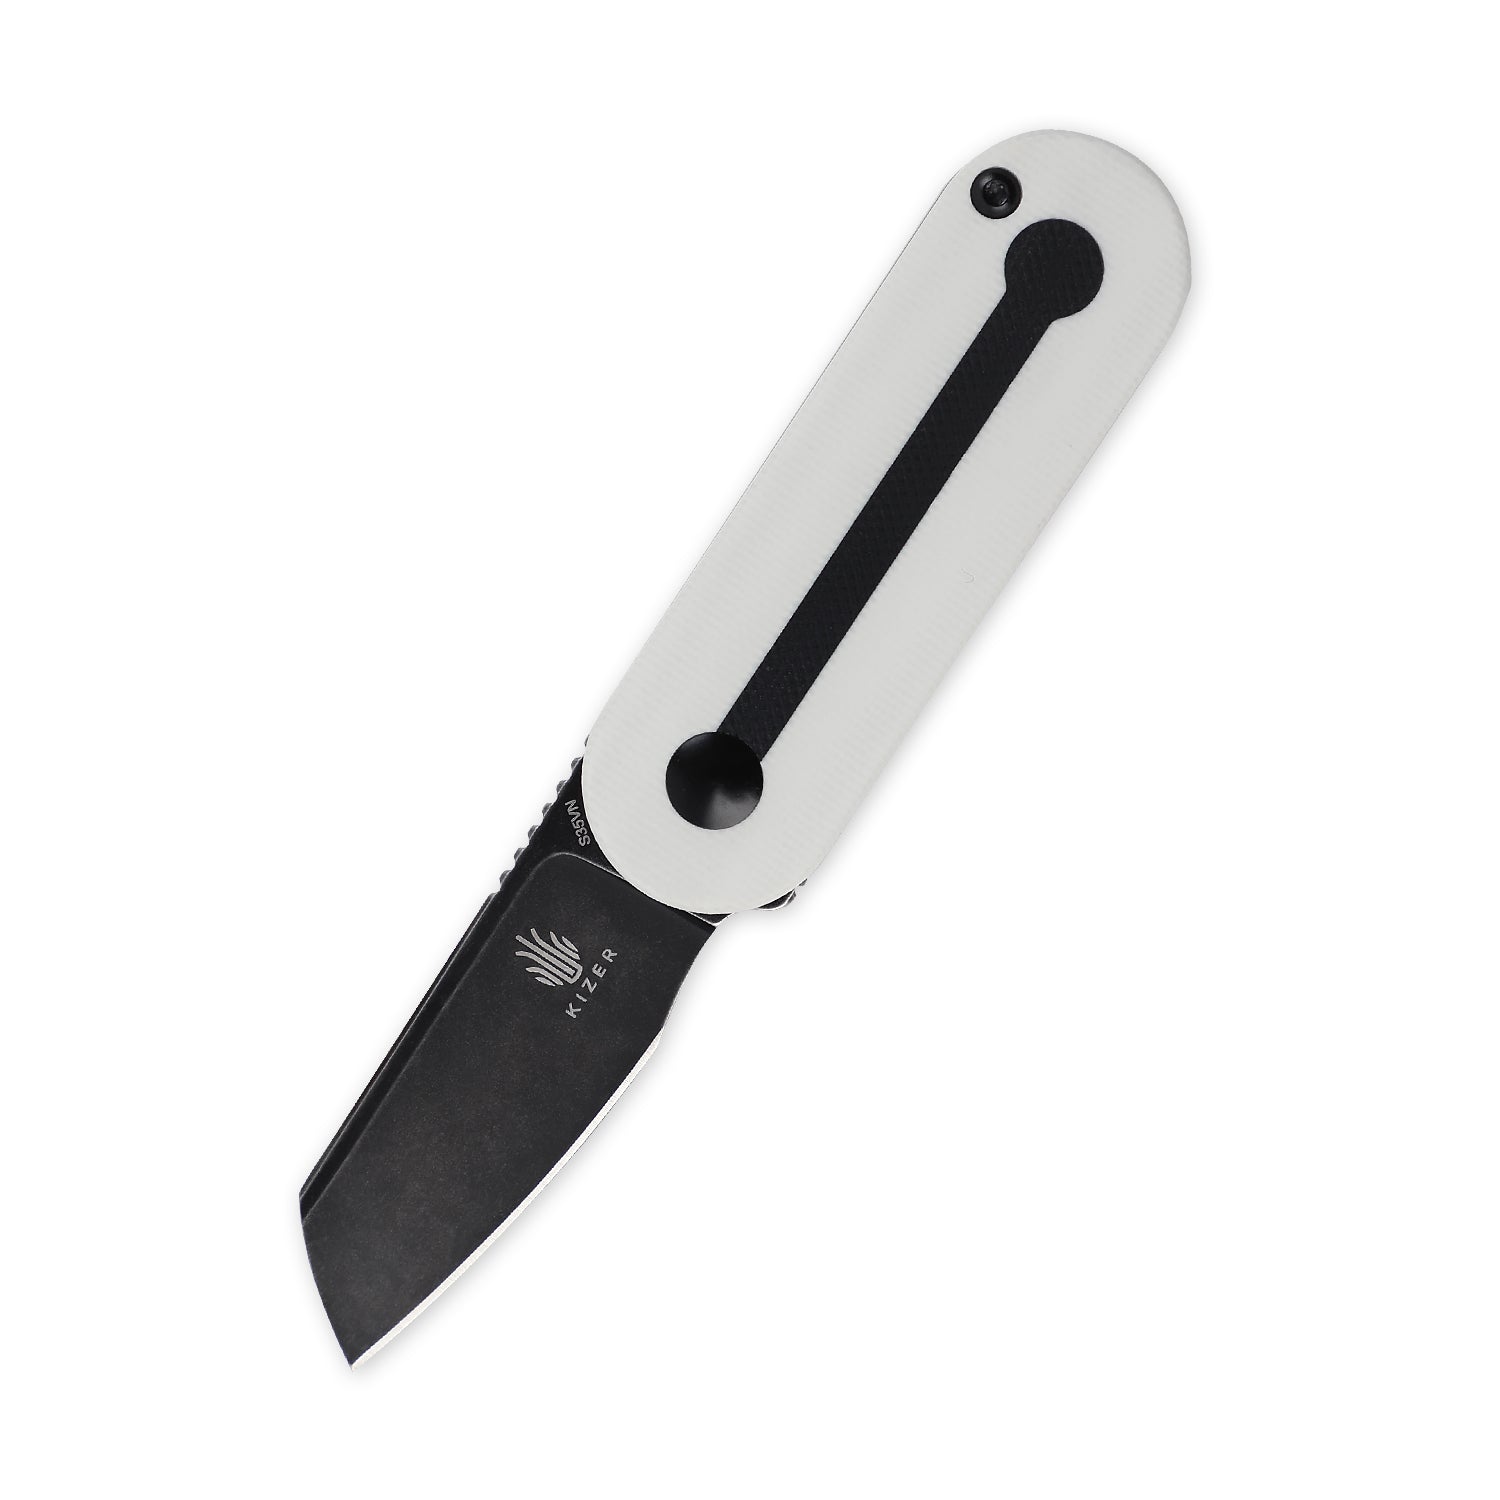 Lätt Vind Mini Pink and White G-10 Handle EDC Outdoor Knife - Kizer